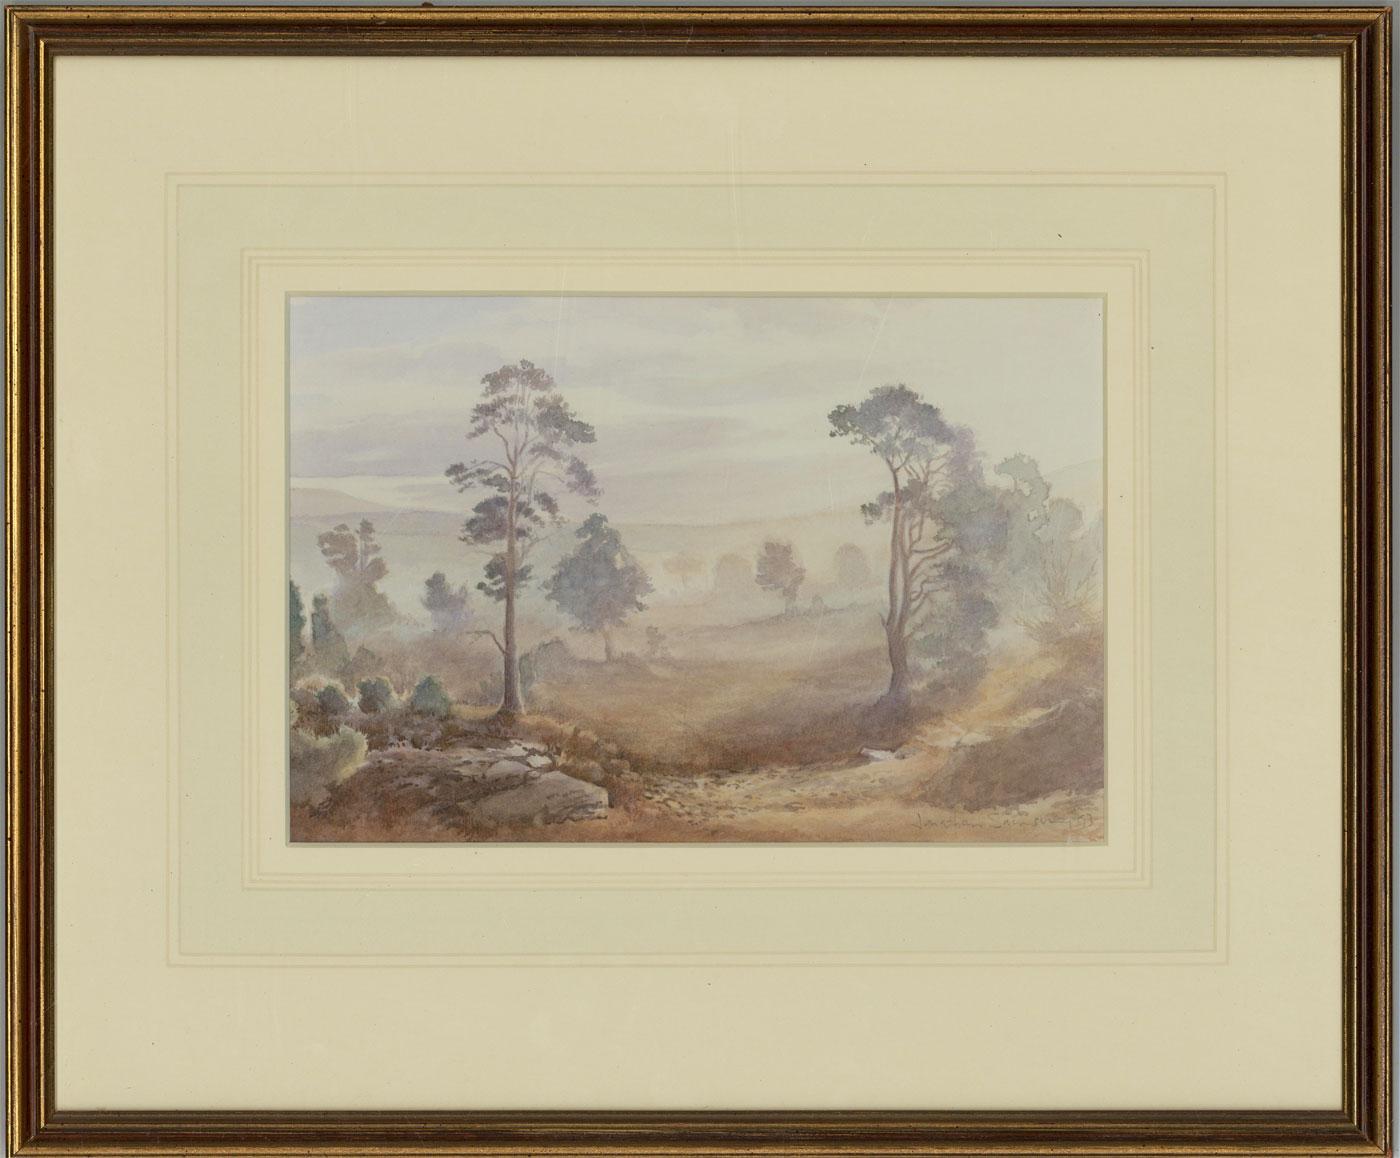 Unknown Landscape Art - Jonathon Sainsbury (b.1951) - Signed & Framed 1993 Watercolour, Landscape Scene